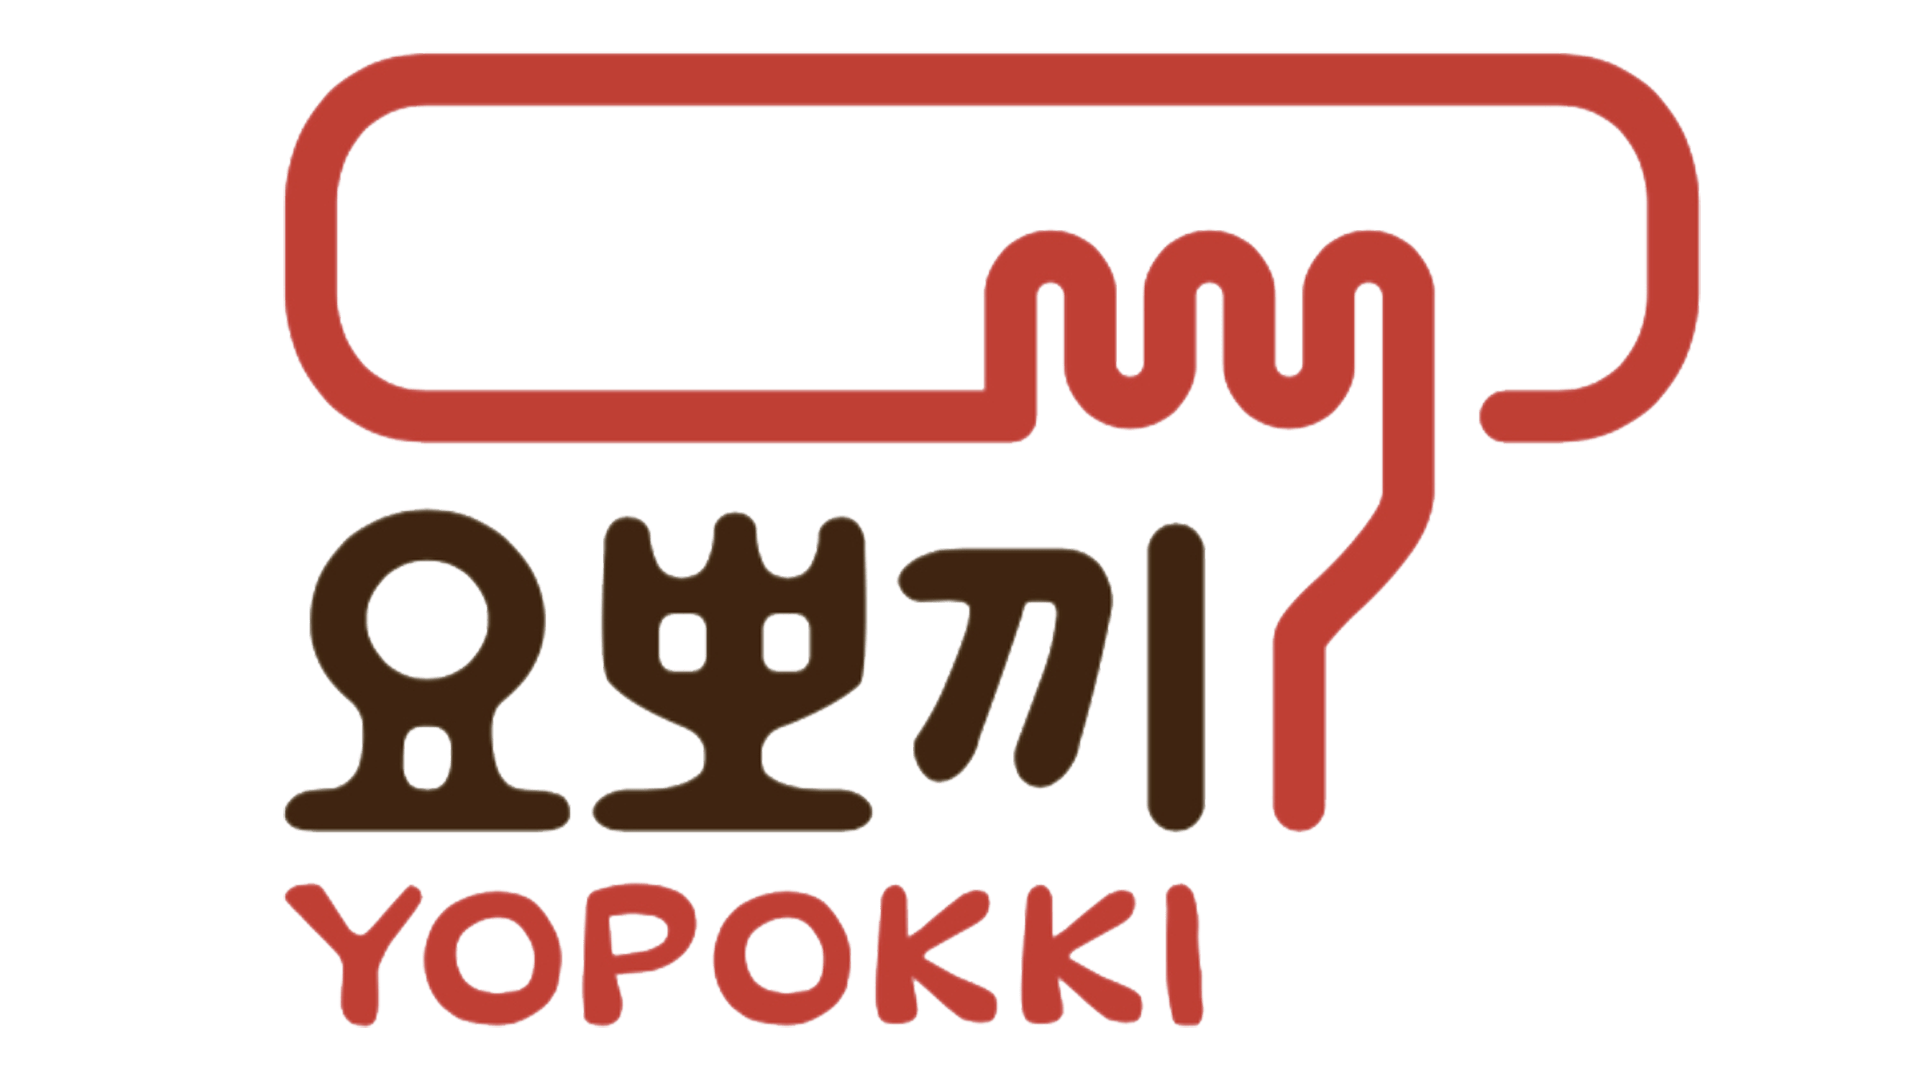 YOPOKKI